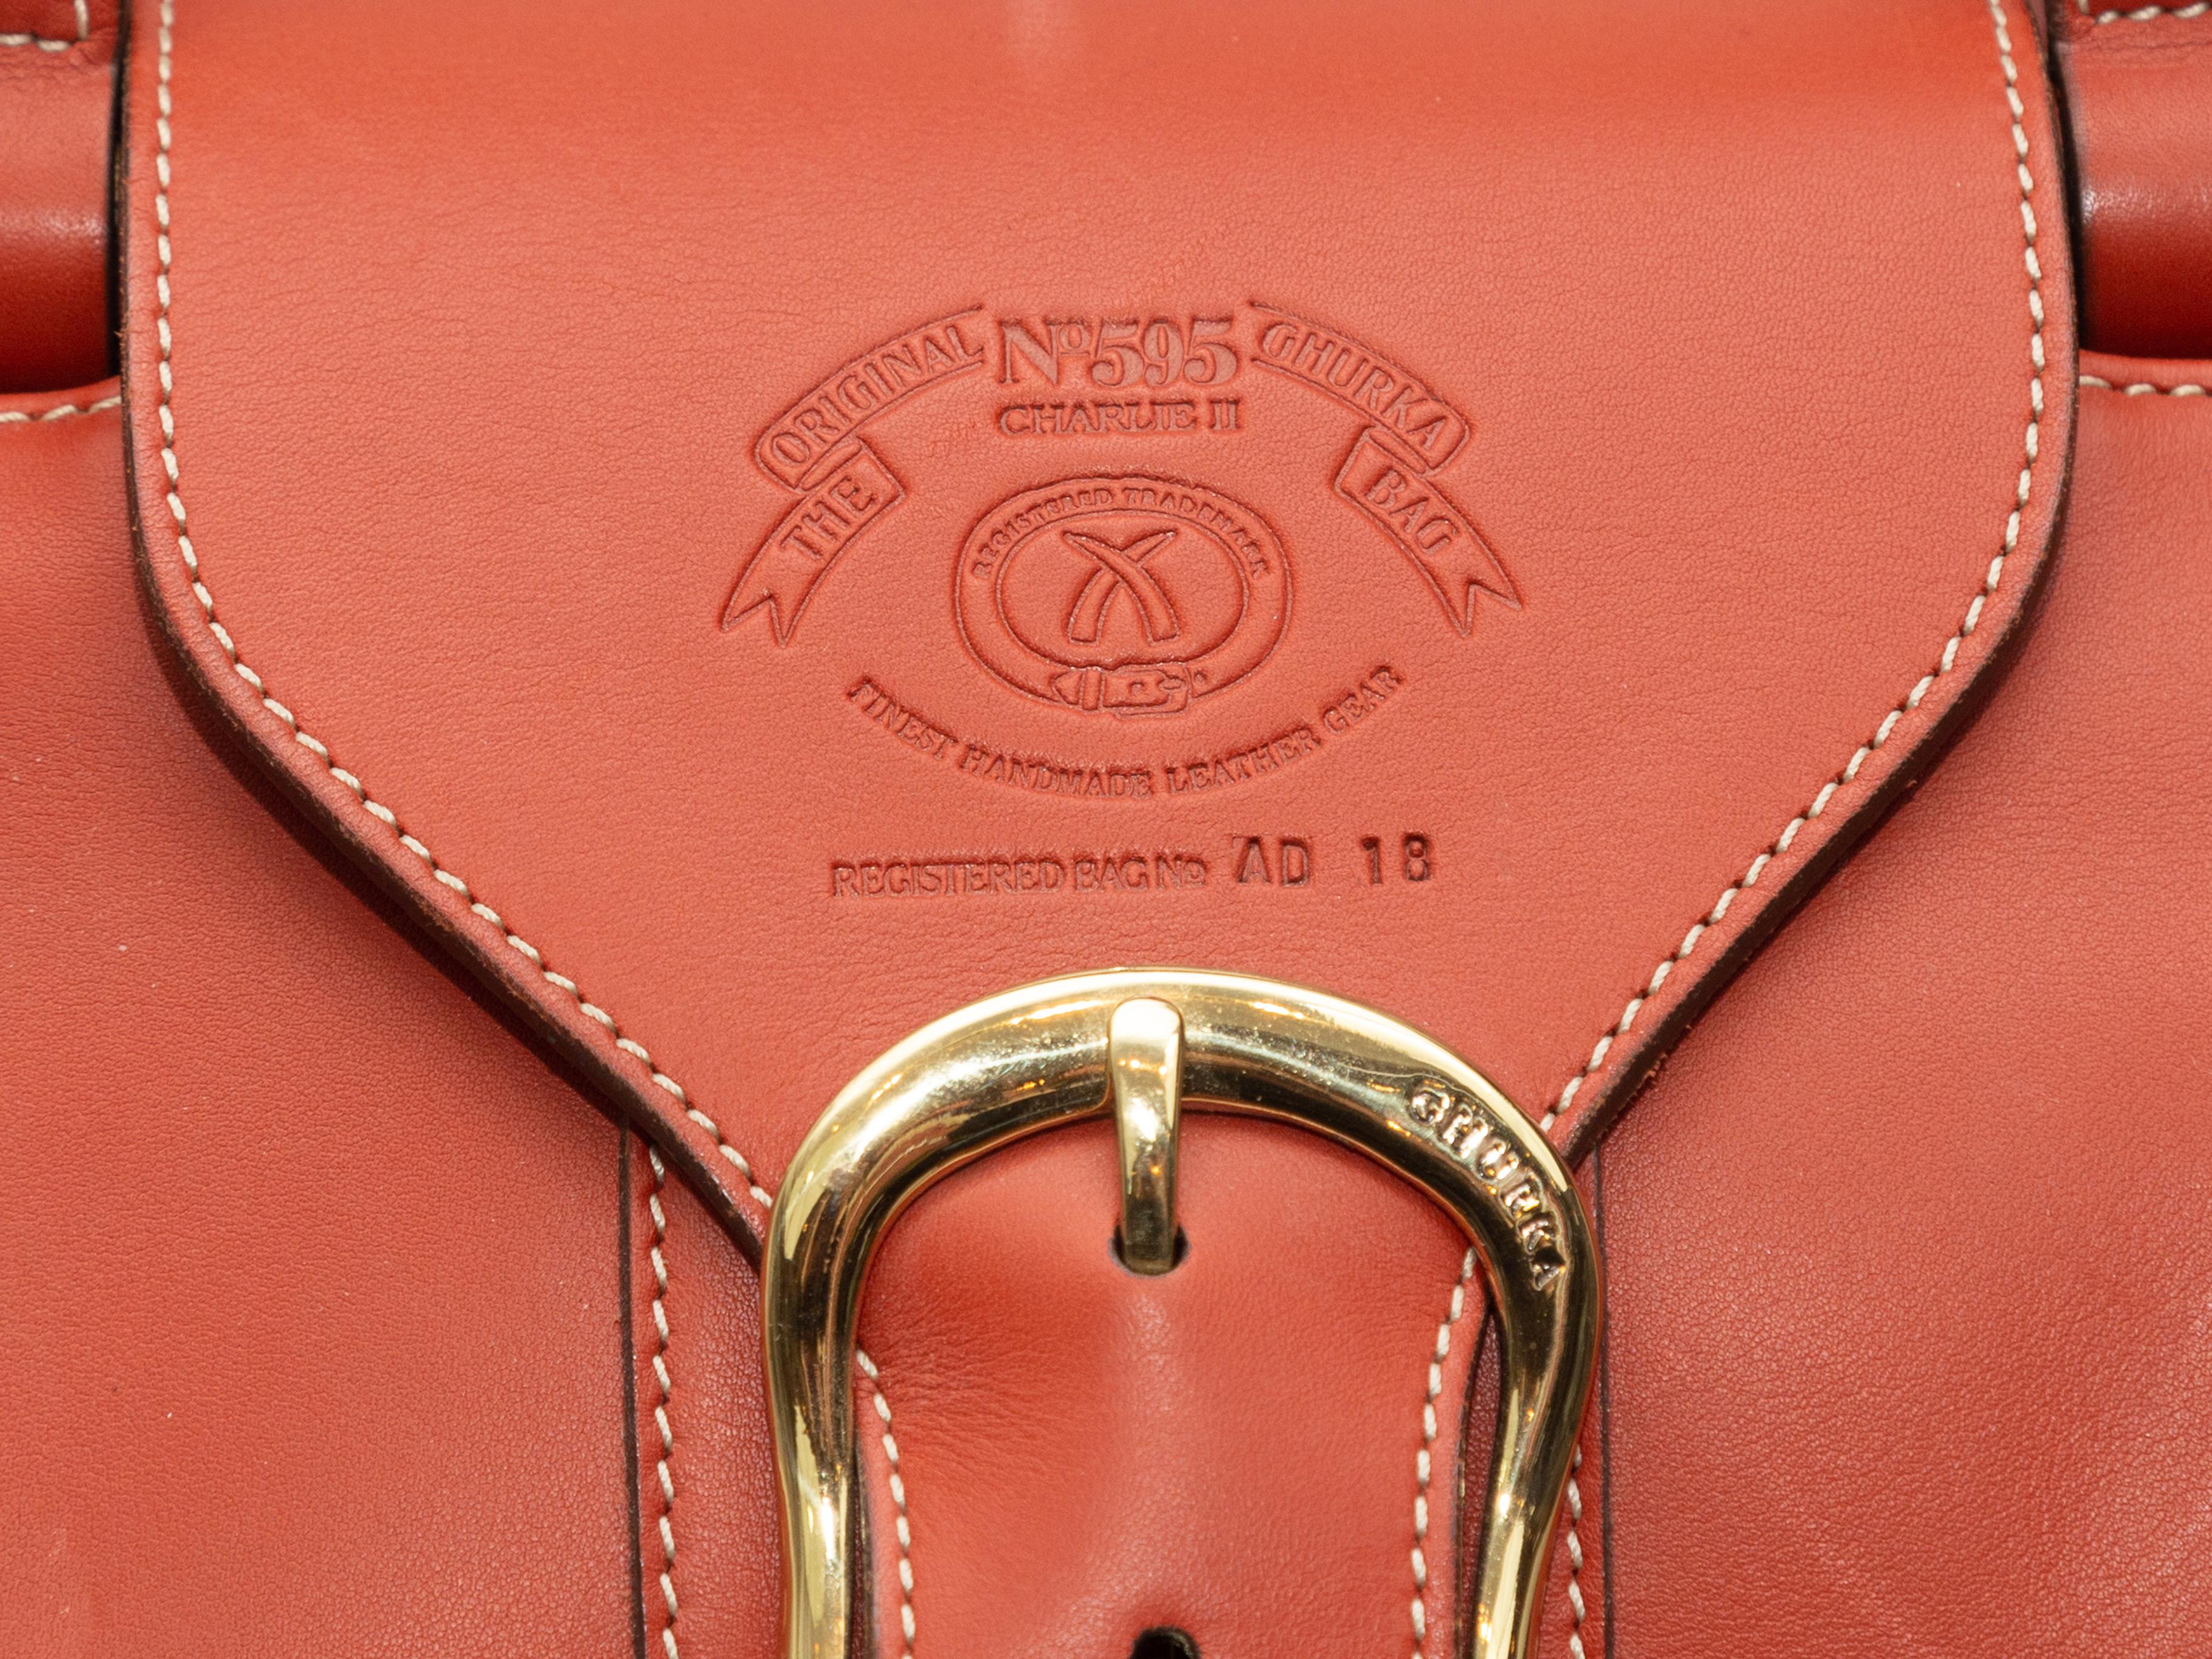 Product details: Orange large leather handbag by Ghurka. Interior zip pocket. Wooden detailing at dual top handles. Buckle closure at top. 15